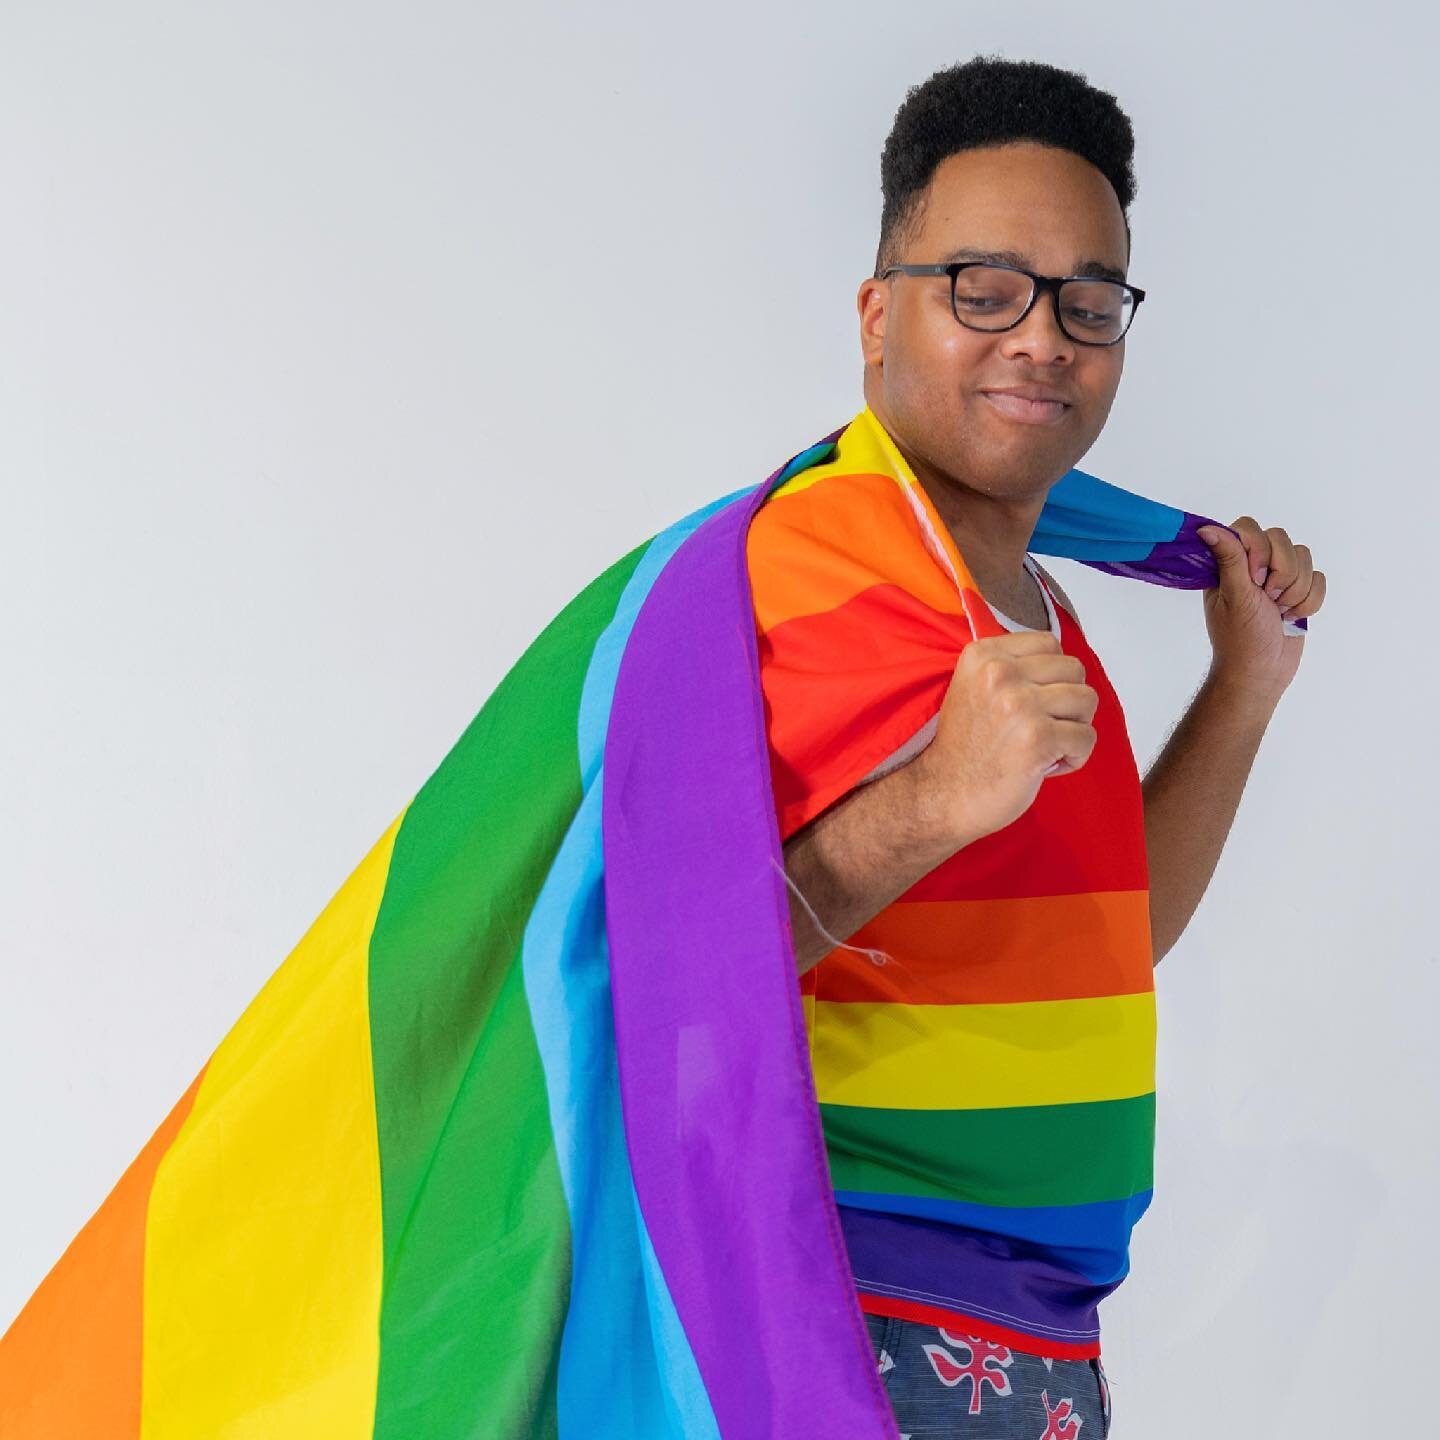 Model: @gayninja99 

#pridemonth #pride #pride🌈 #lgbt #lgbtq #lgbtcommunity #lgbtpride #model #gay #gaypride #gaymen #photoshoot #portraitphotography #portrait #gaymodel